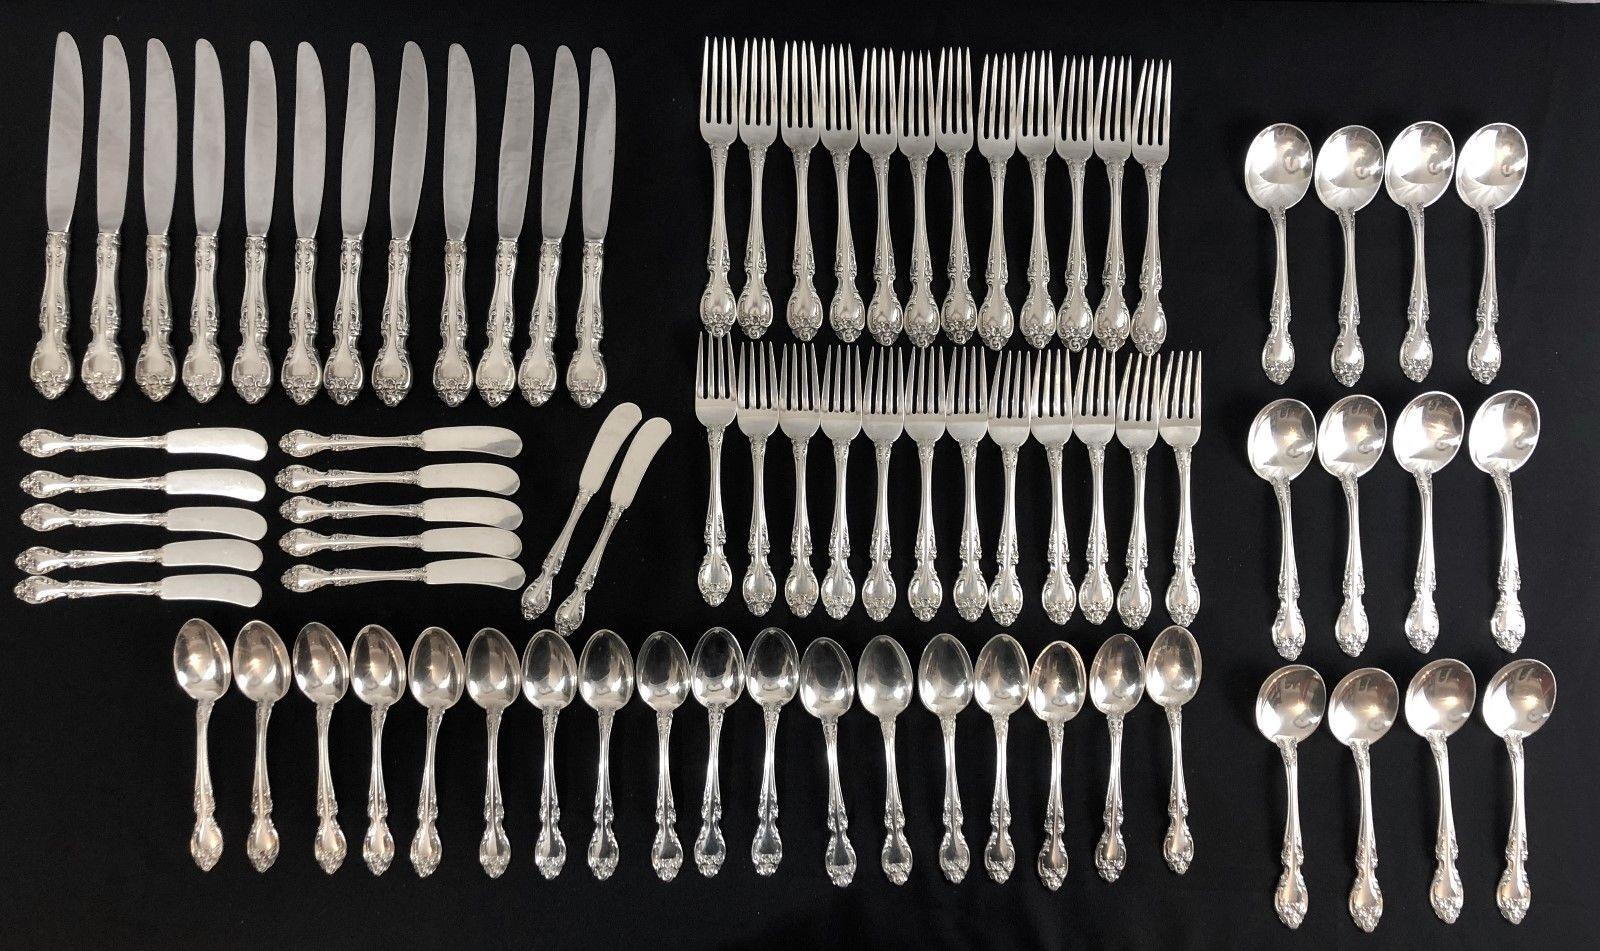 Gorham sterling silver flatware service for twelve in the Melrose pattern (1948). No Monograms.

12 dinner knives - 8 7/8